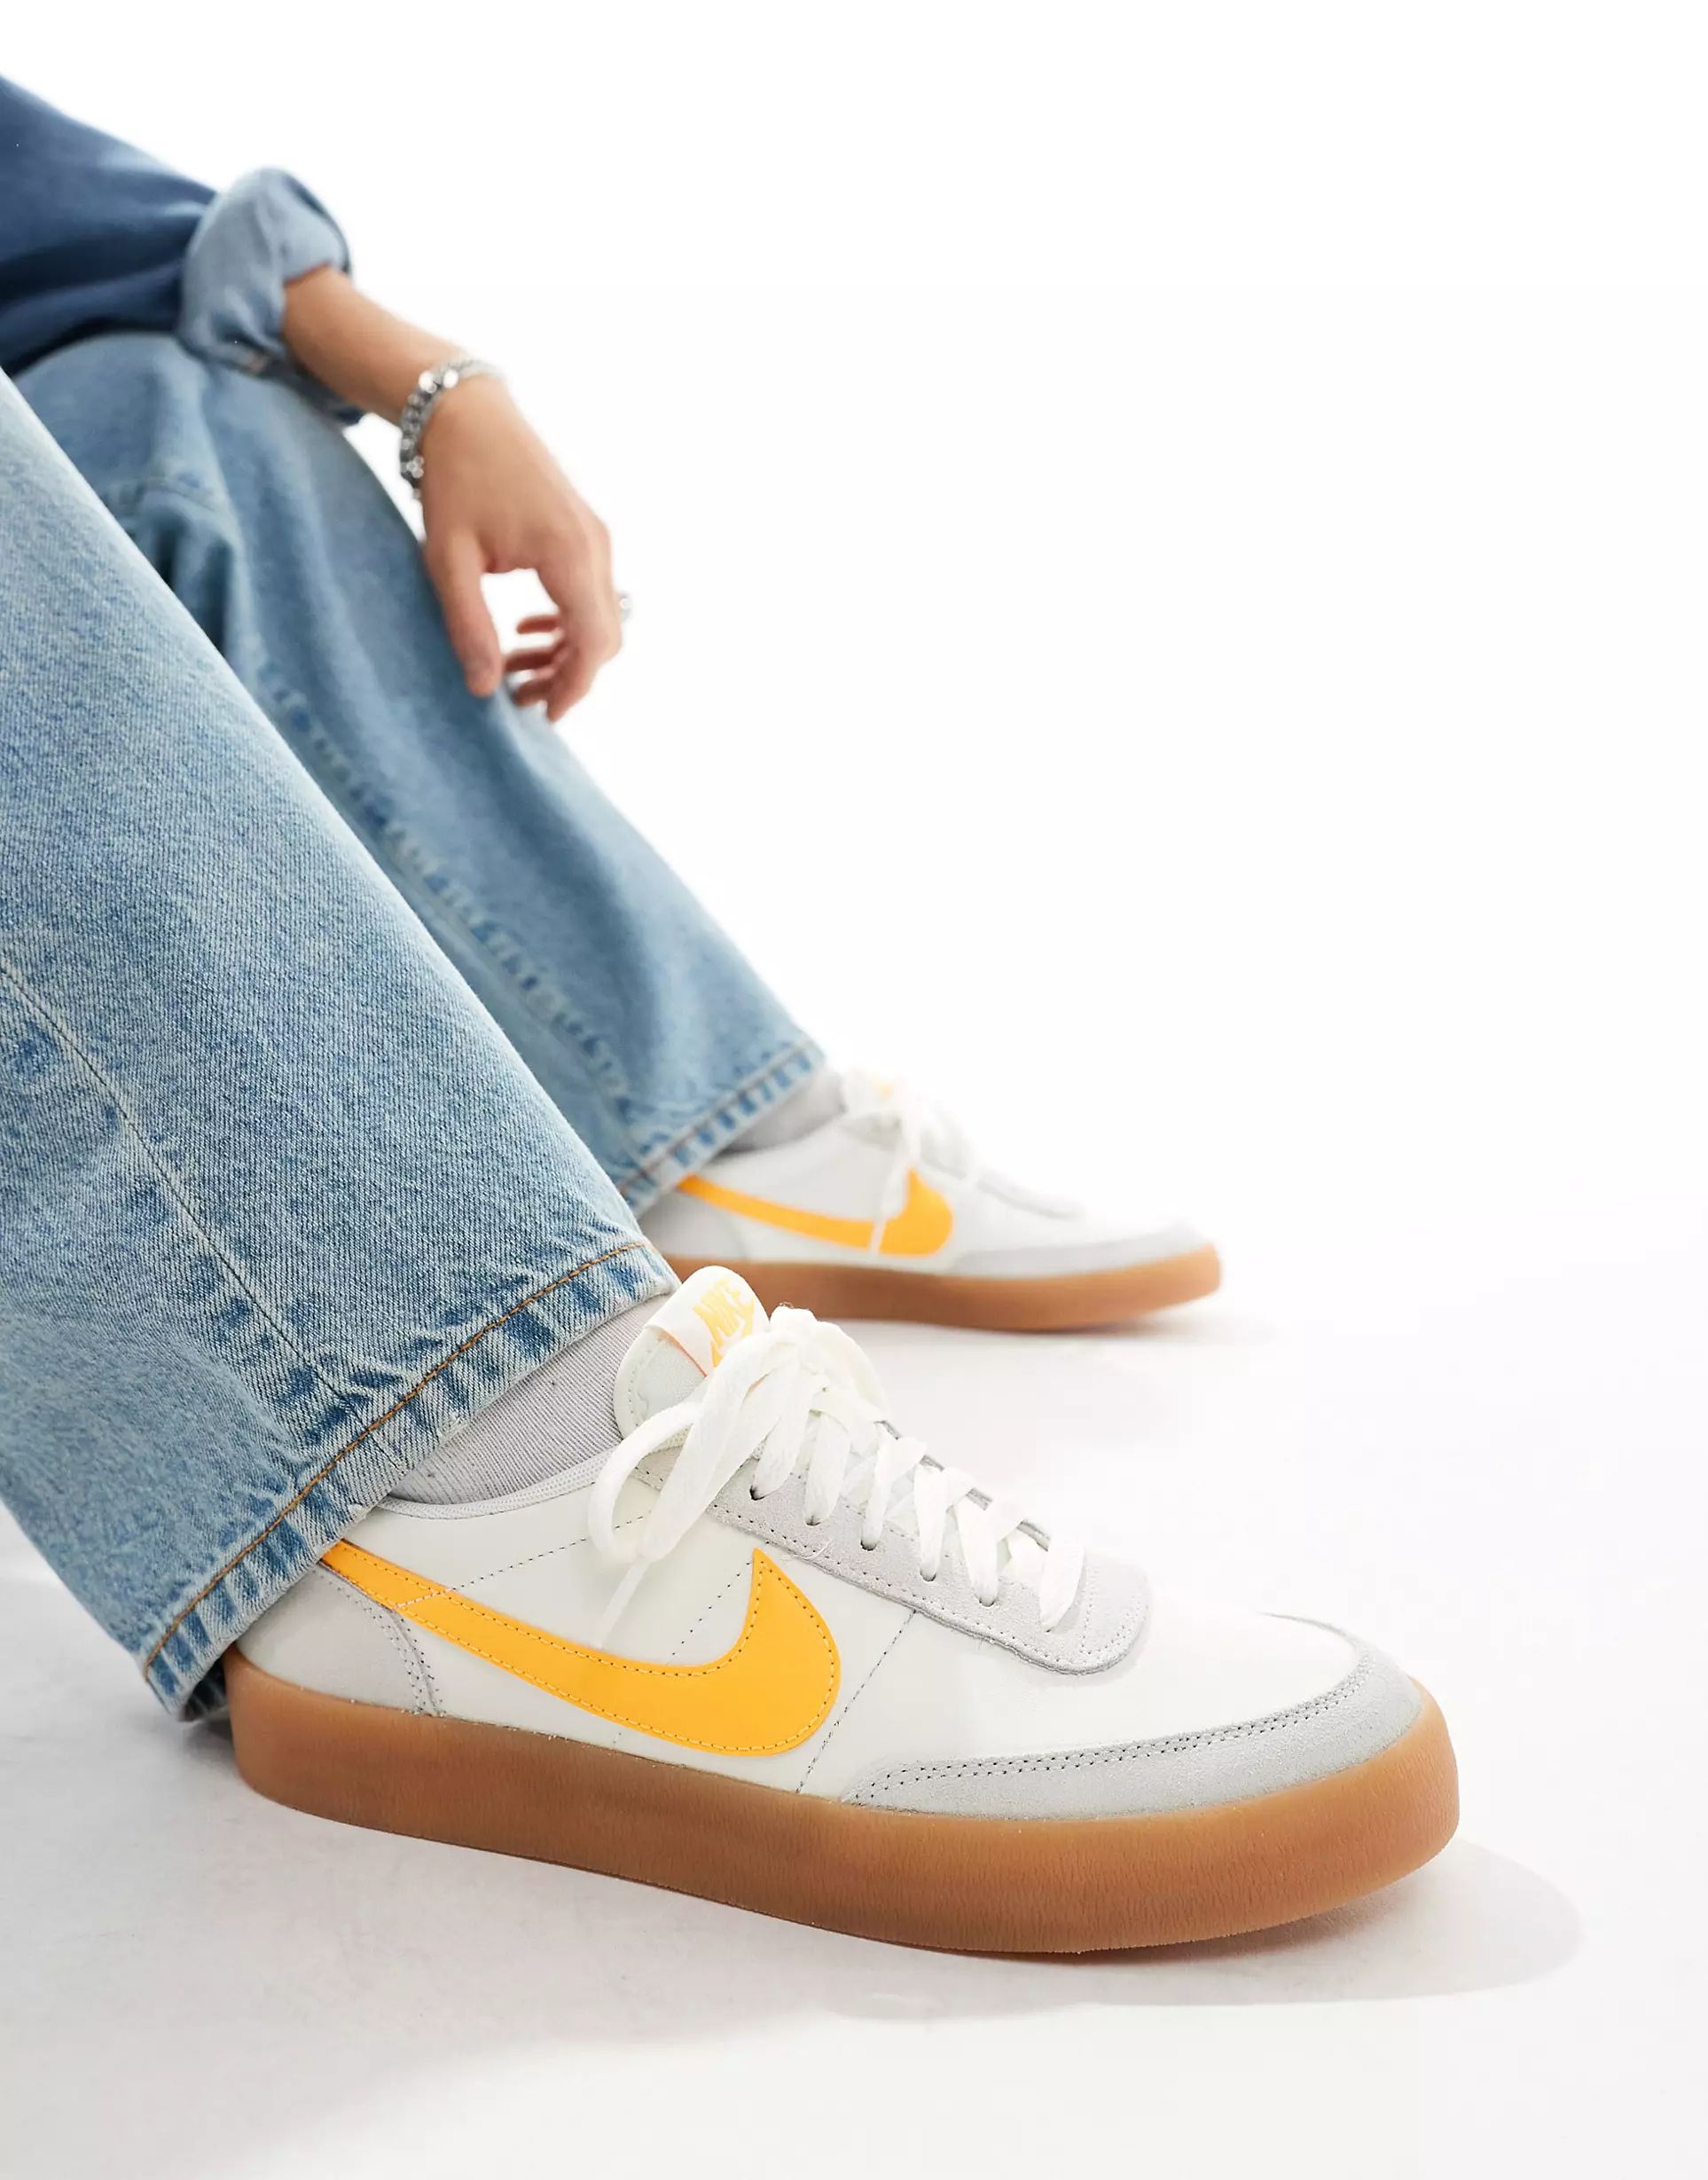 Nike Killshot 2 leather sneakers in white and yellow | ASOS (Global)